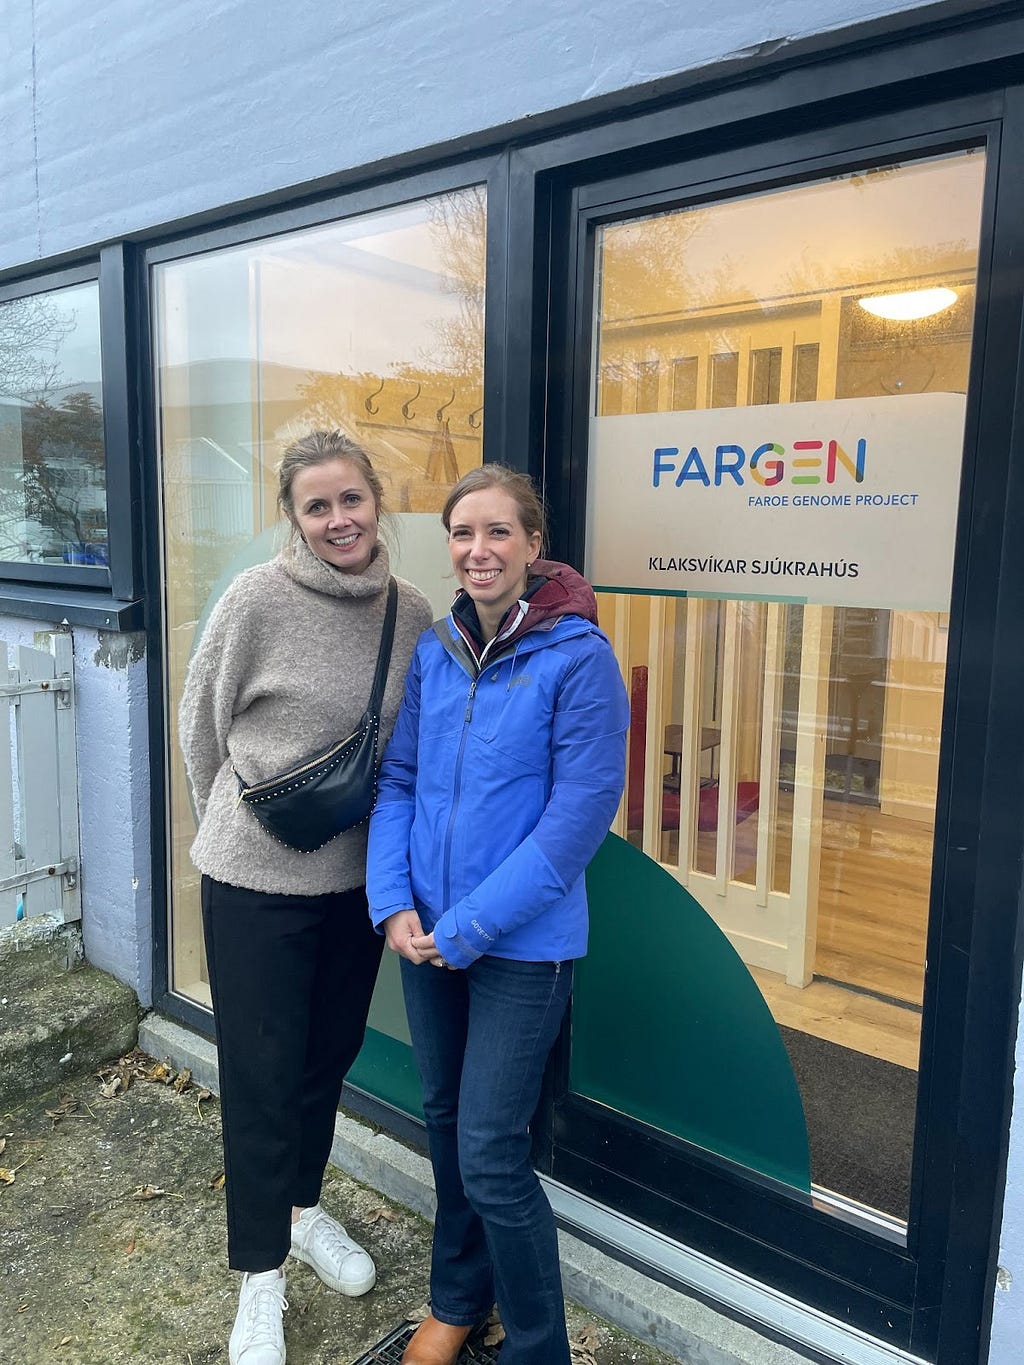 Noomi Gregersen with Melissa Hendershott outside one of the FarGen project’s offices (the Klaksvík location).